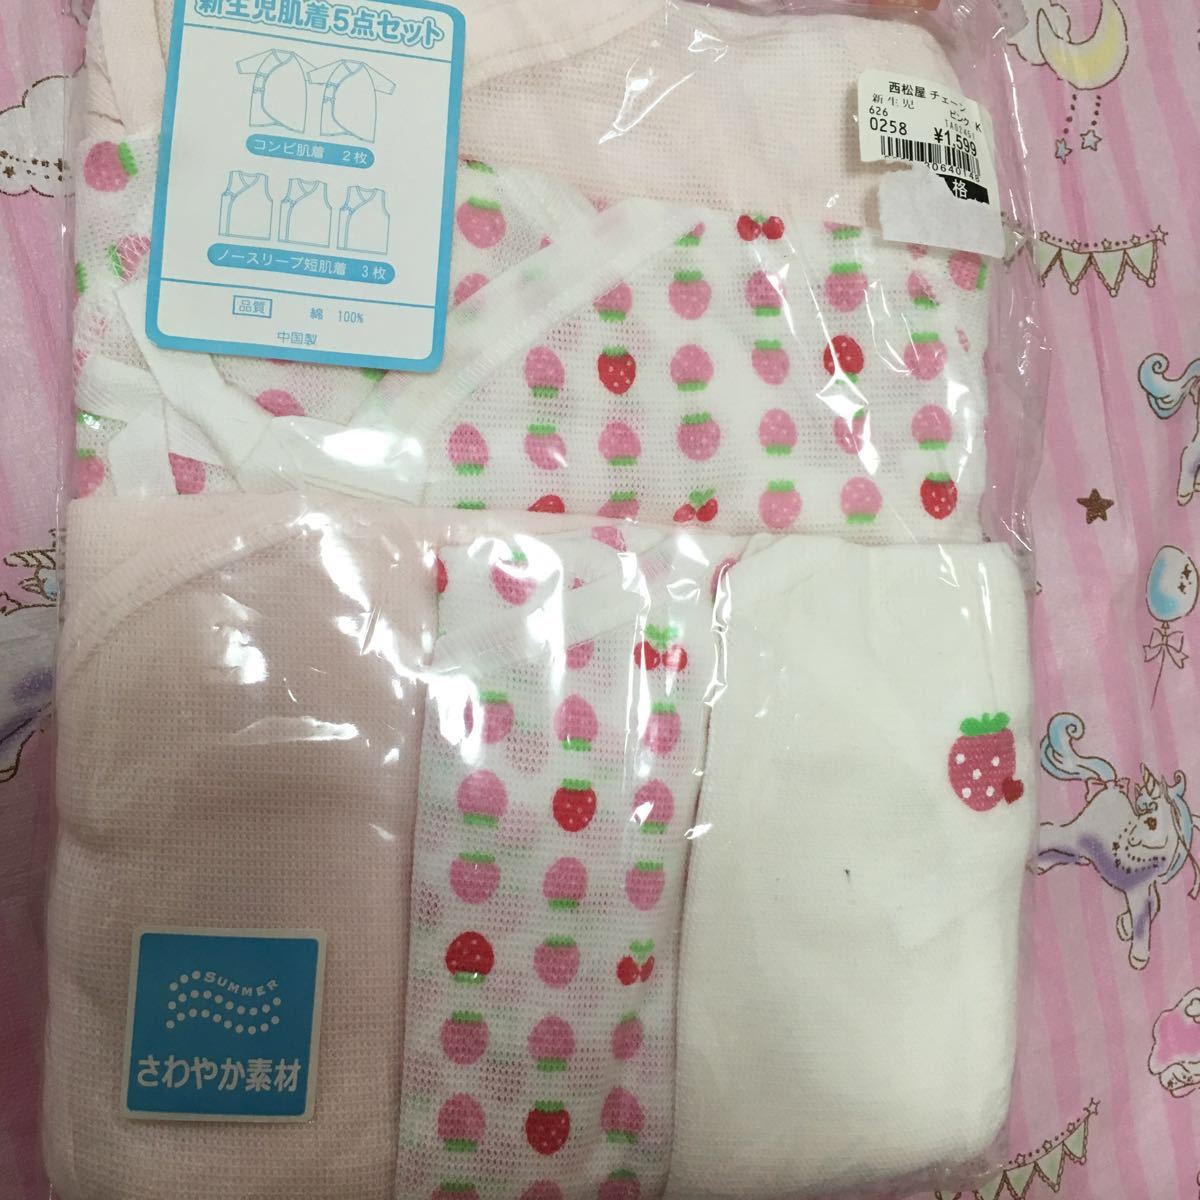  girl newborn baby birth preparation baby lucky bag pillow underwear bathing set made in Japan organic amo low sa man ma sleeper lucky bag summer birth present 